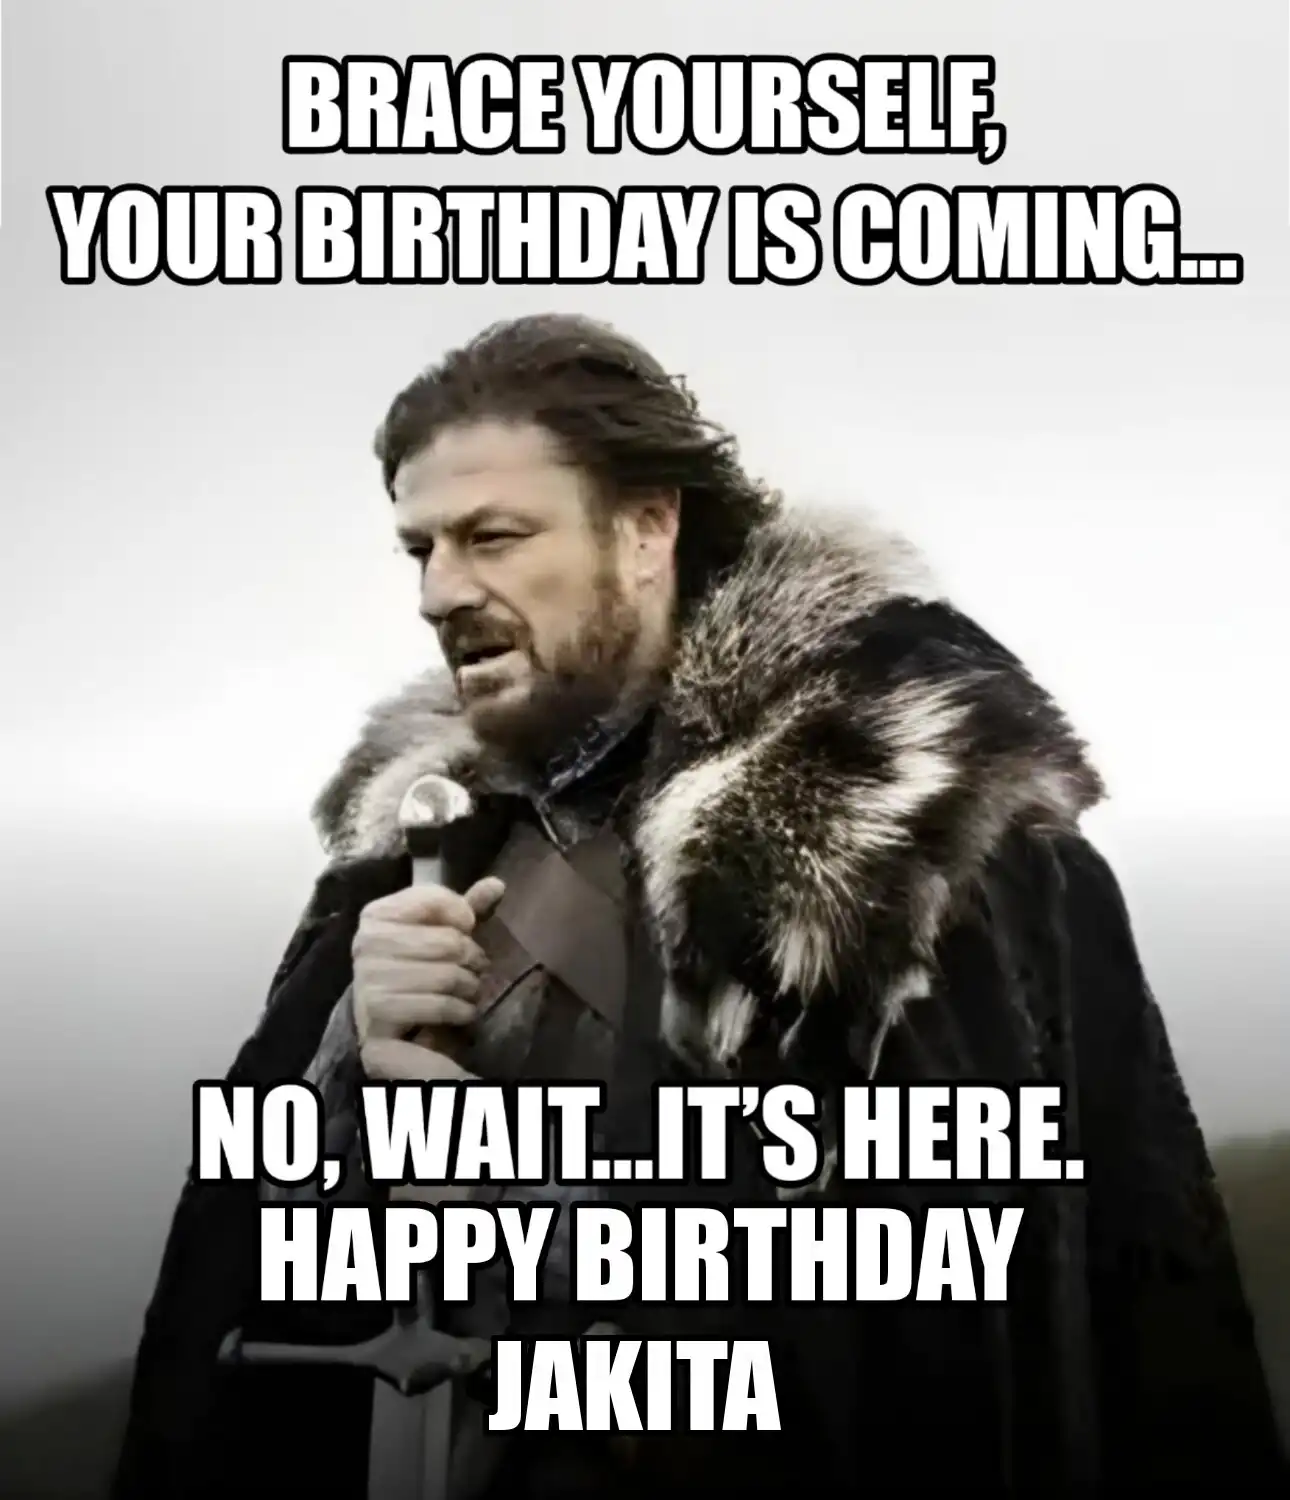 Happy Birthday Jakita Brace Yourself Your Birthday Is Coming Meme